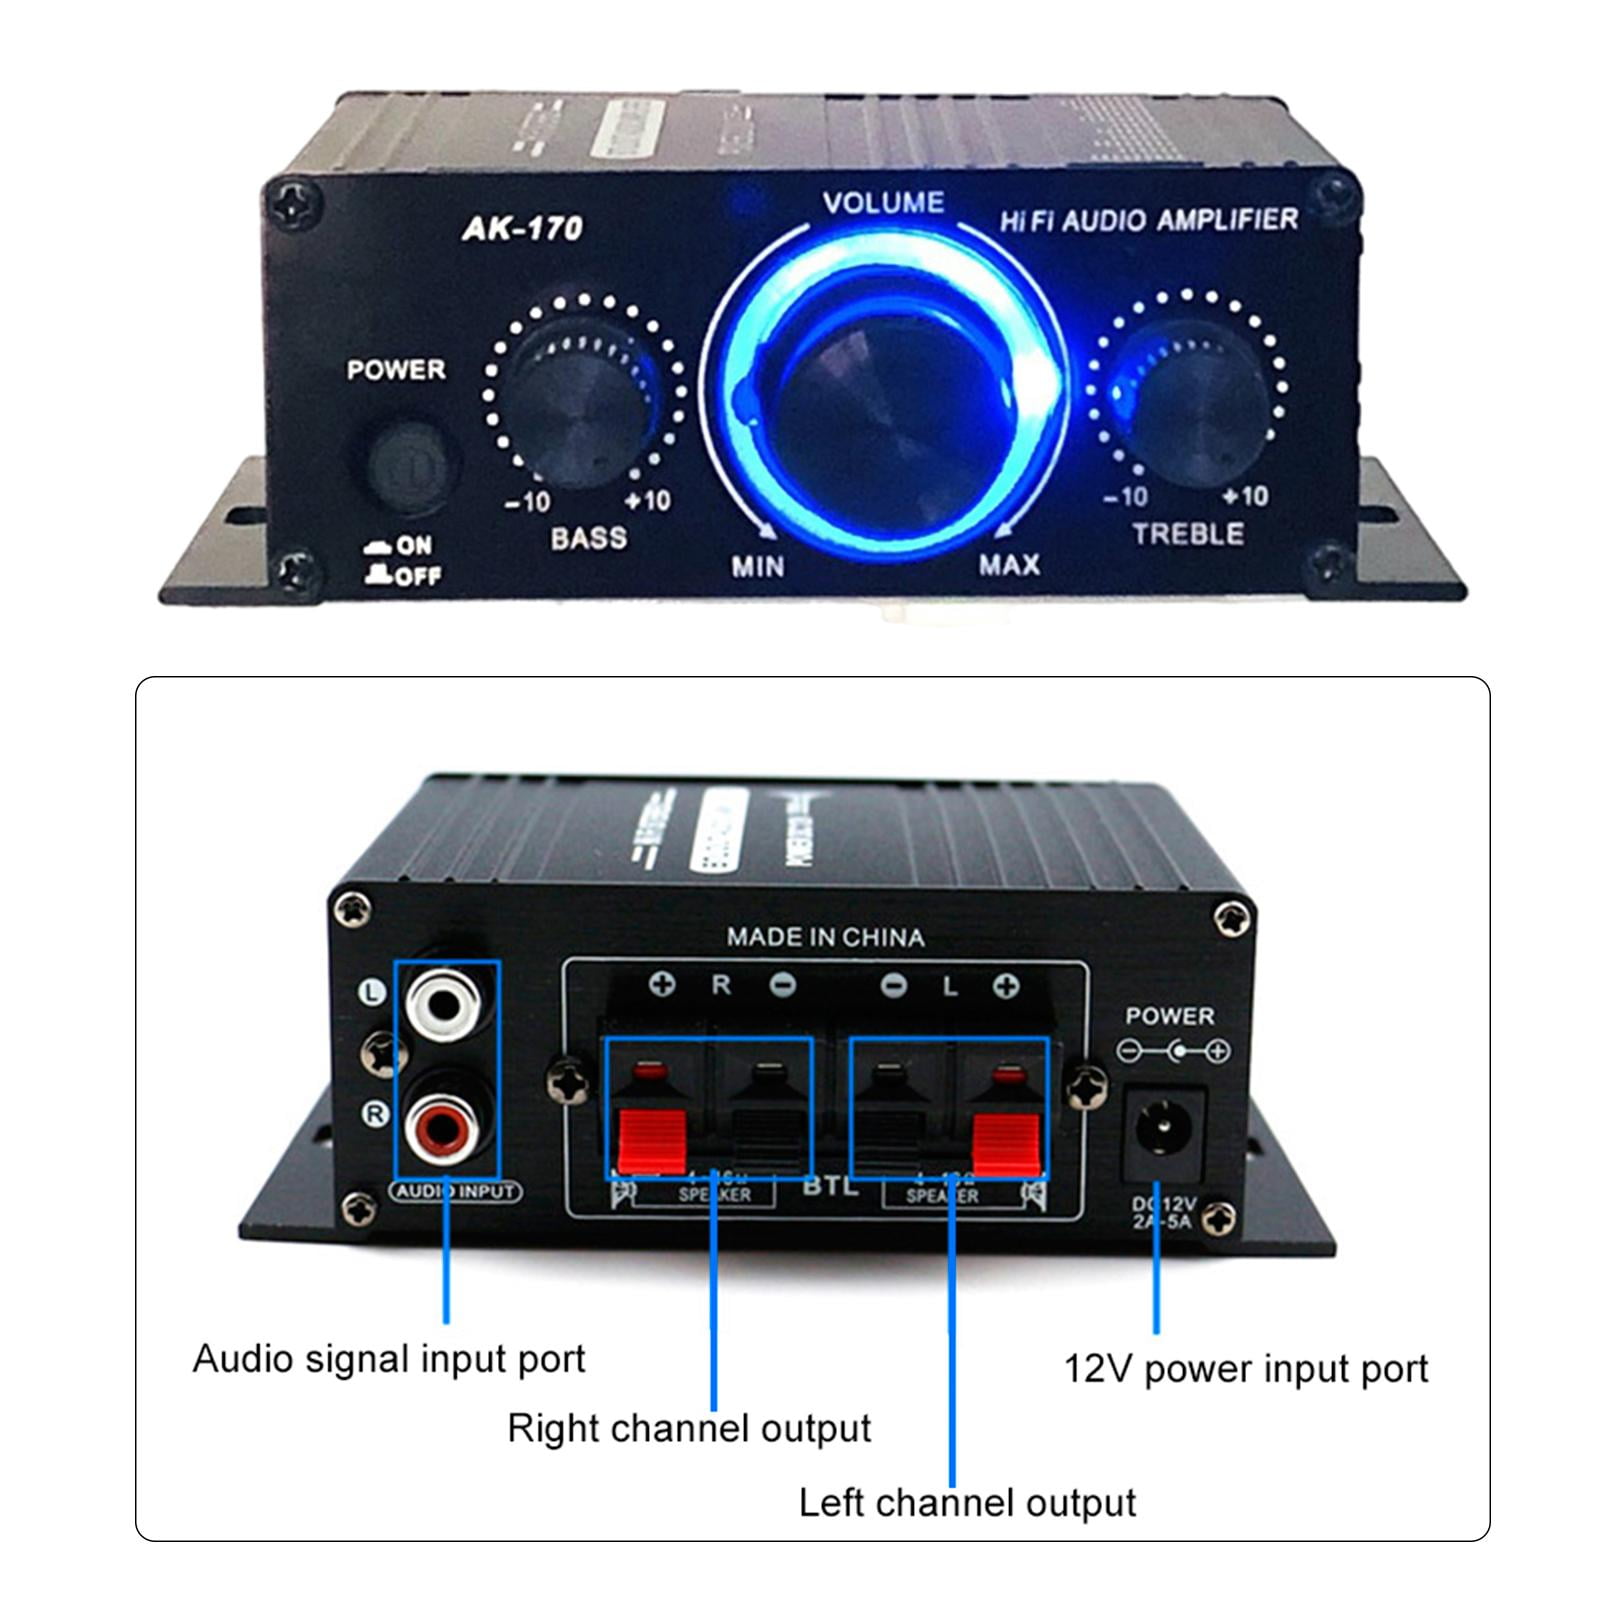 AK170 Mini Amplifier Portable Receiver 2 Channel 20W+20W Bass Volume Control Subwoofer for Car Home Use - Walmart.com